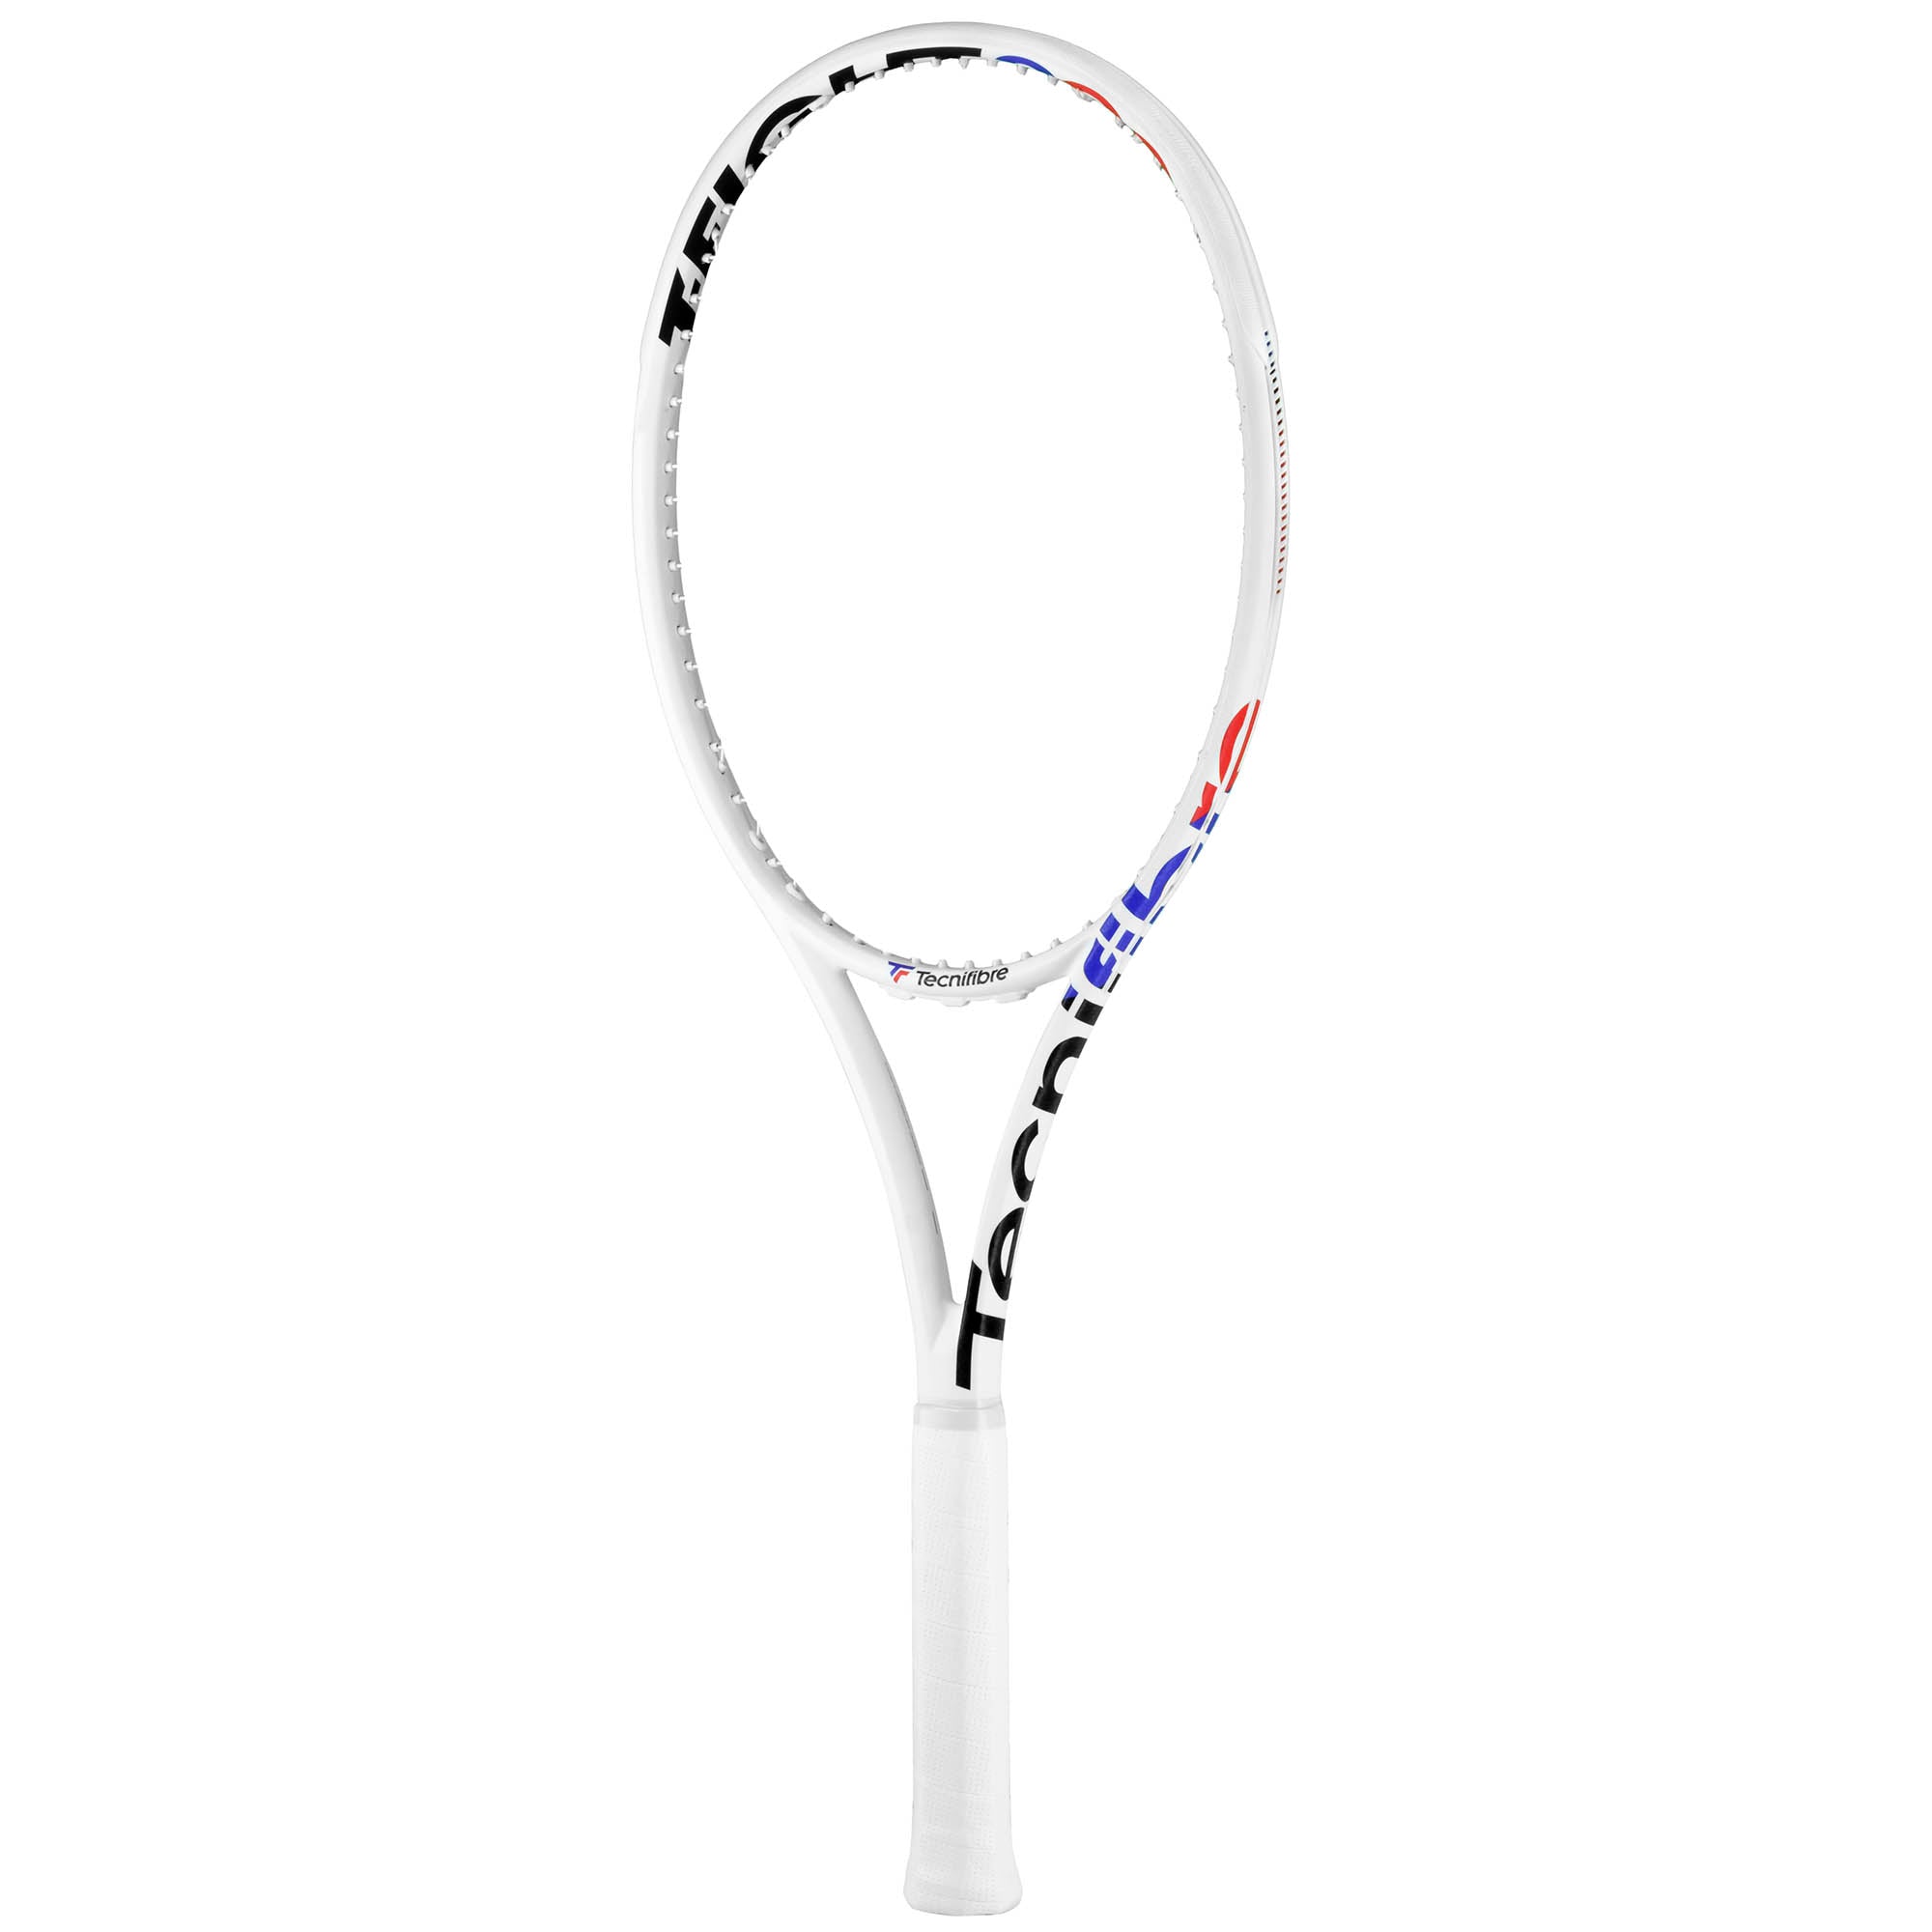 Tecnifibre T-Fight 300 Isoflex Tennis Racket from Sweatband.com